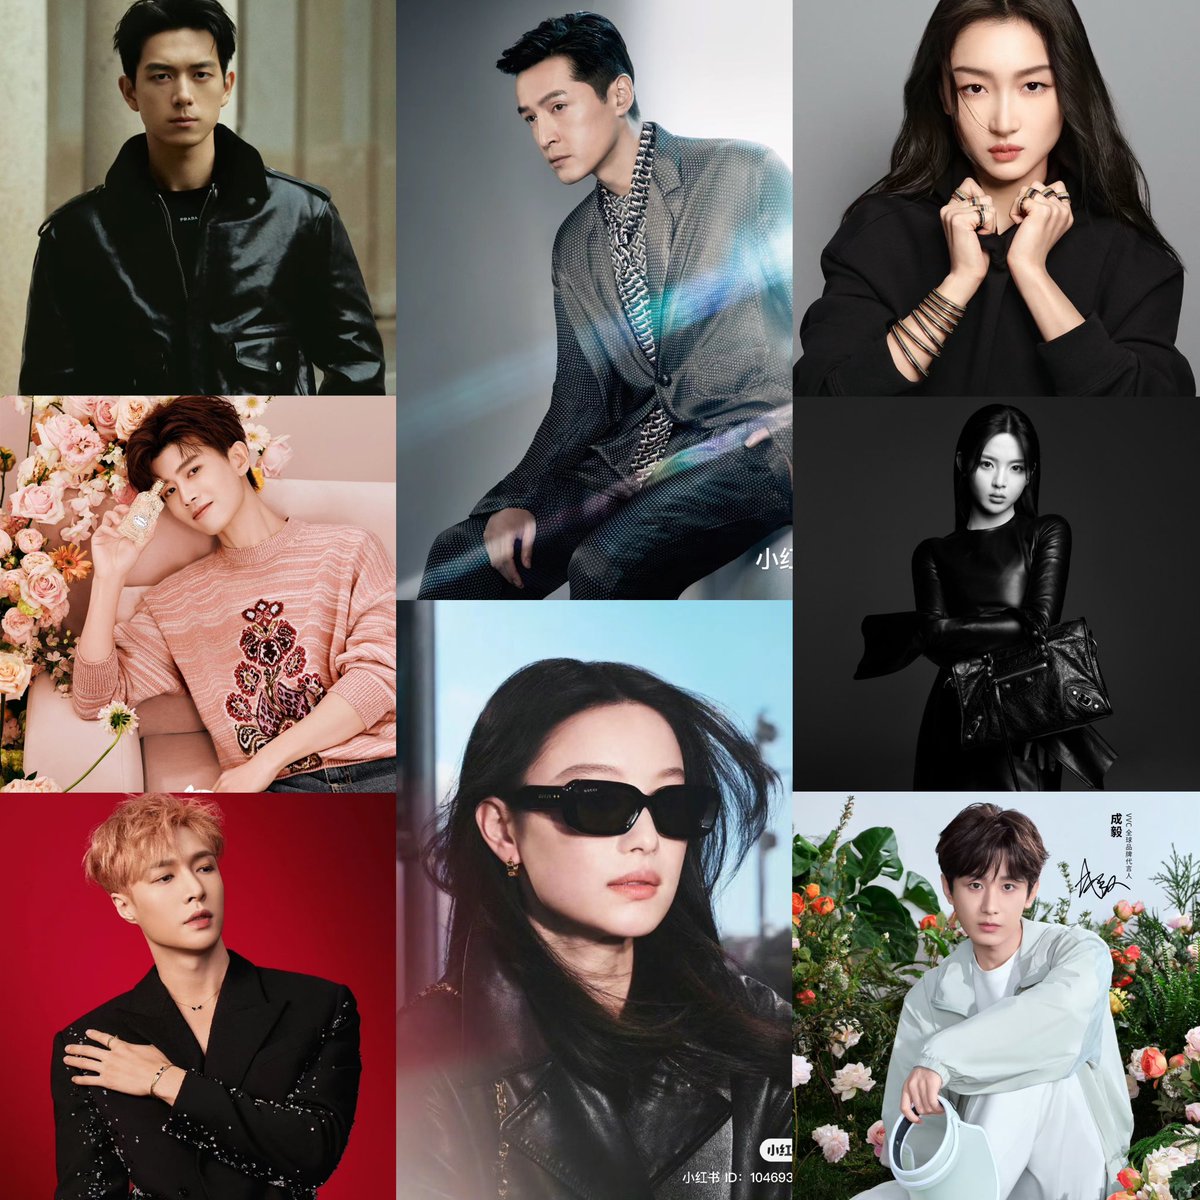 Global Campaigns of C-Artists 

#XiaoZhan: Gucci (4), Tods (5), Boucheron, Zenith (2), Ralph Lauren Fragrance (2), Nars (many), L'Oreal Pro
#Dilireba: Dior (2), Mikimoto (many), Panerai, Clarins (2)
#LiuYifei: LV, Bvlgari (2), Tissot, Shiseido (many)
#JacksonWang: Cartier, LV,